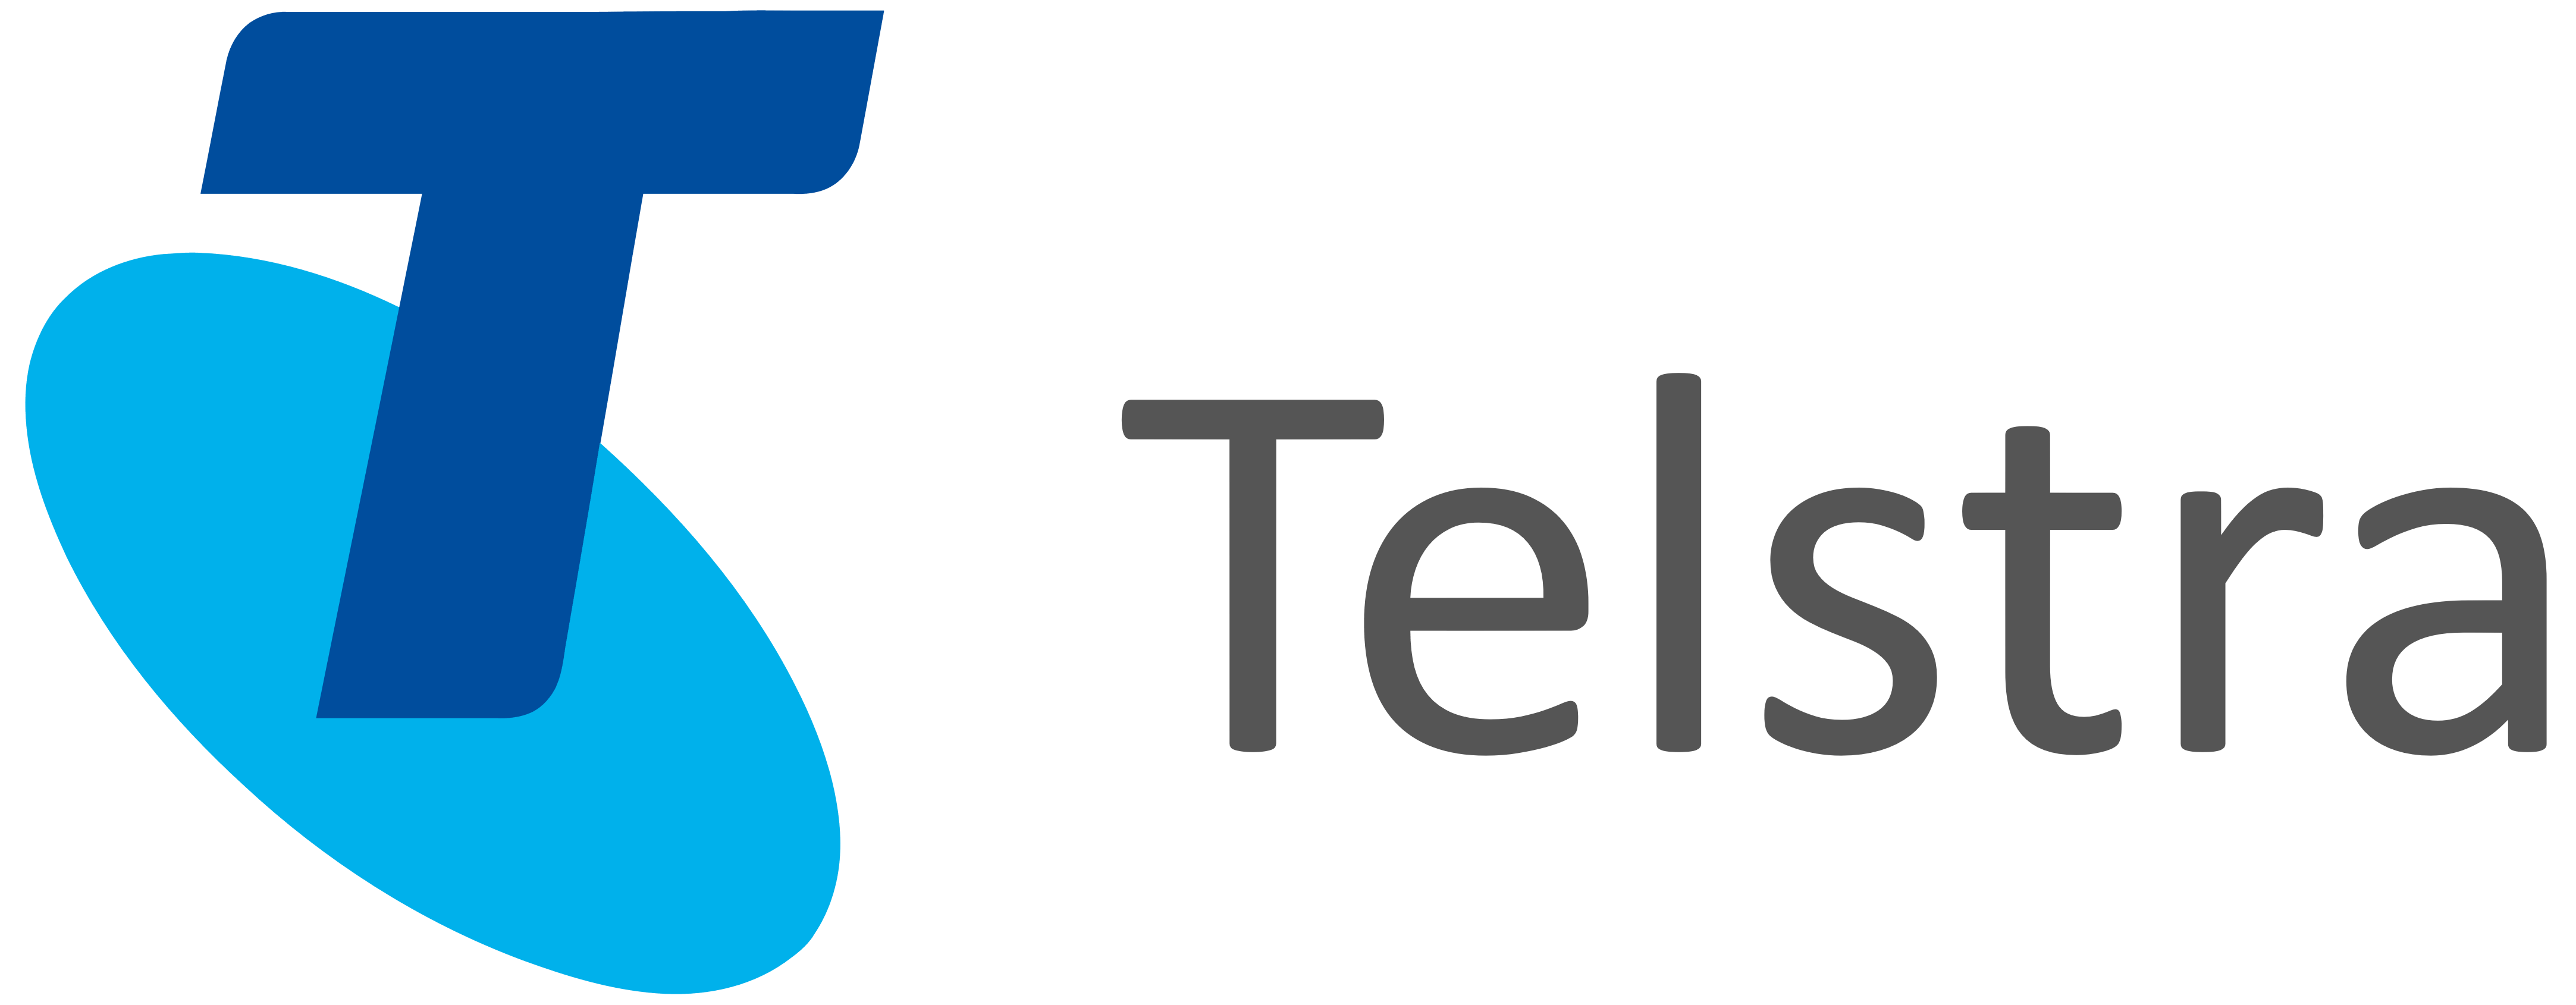 new-Telstra-logo-png-latest